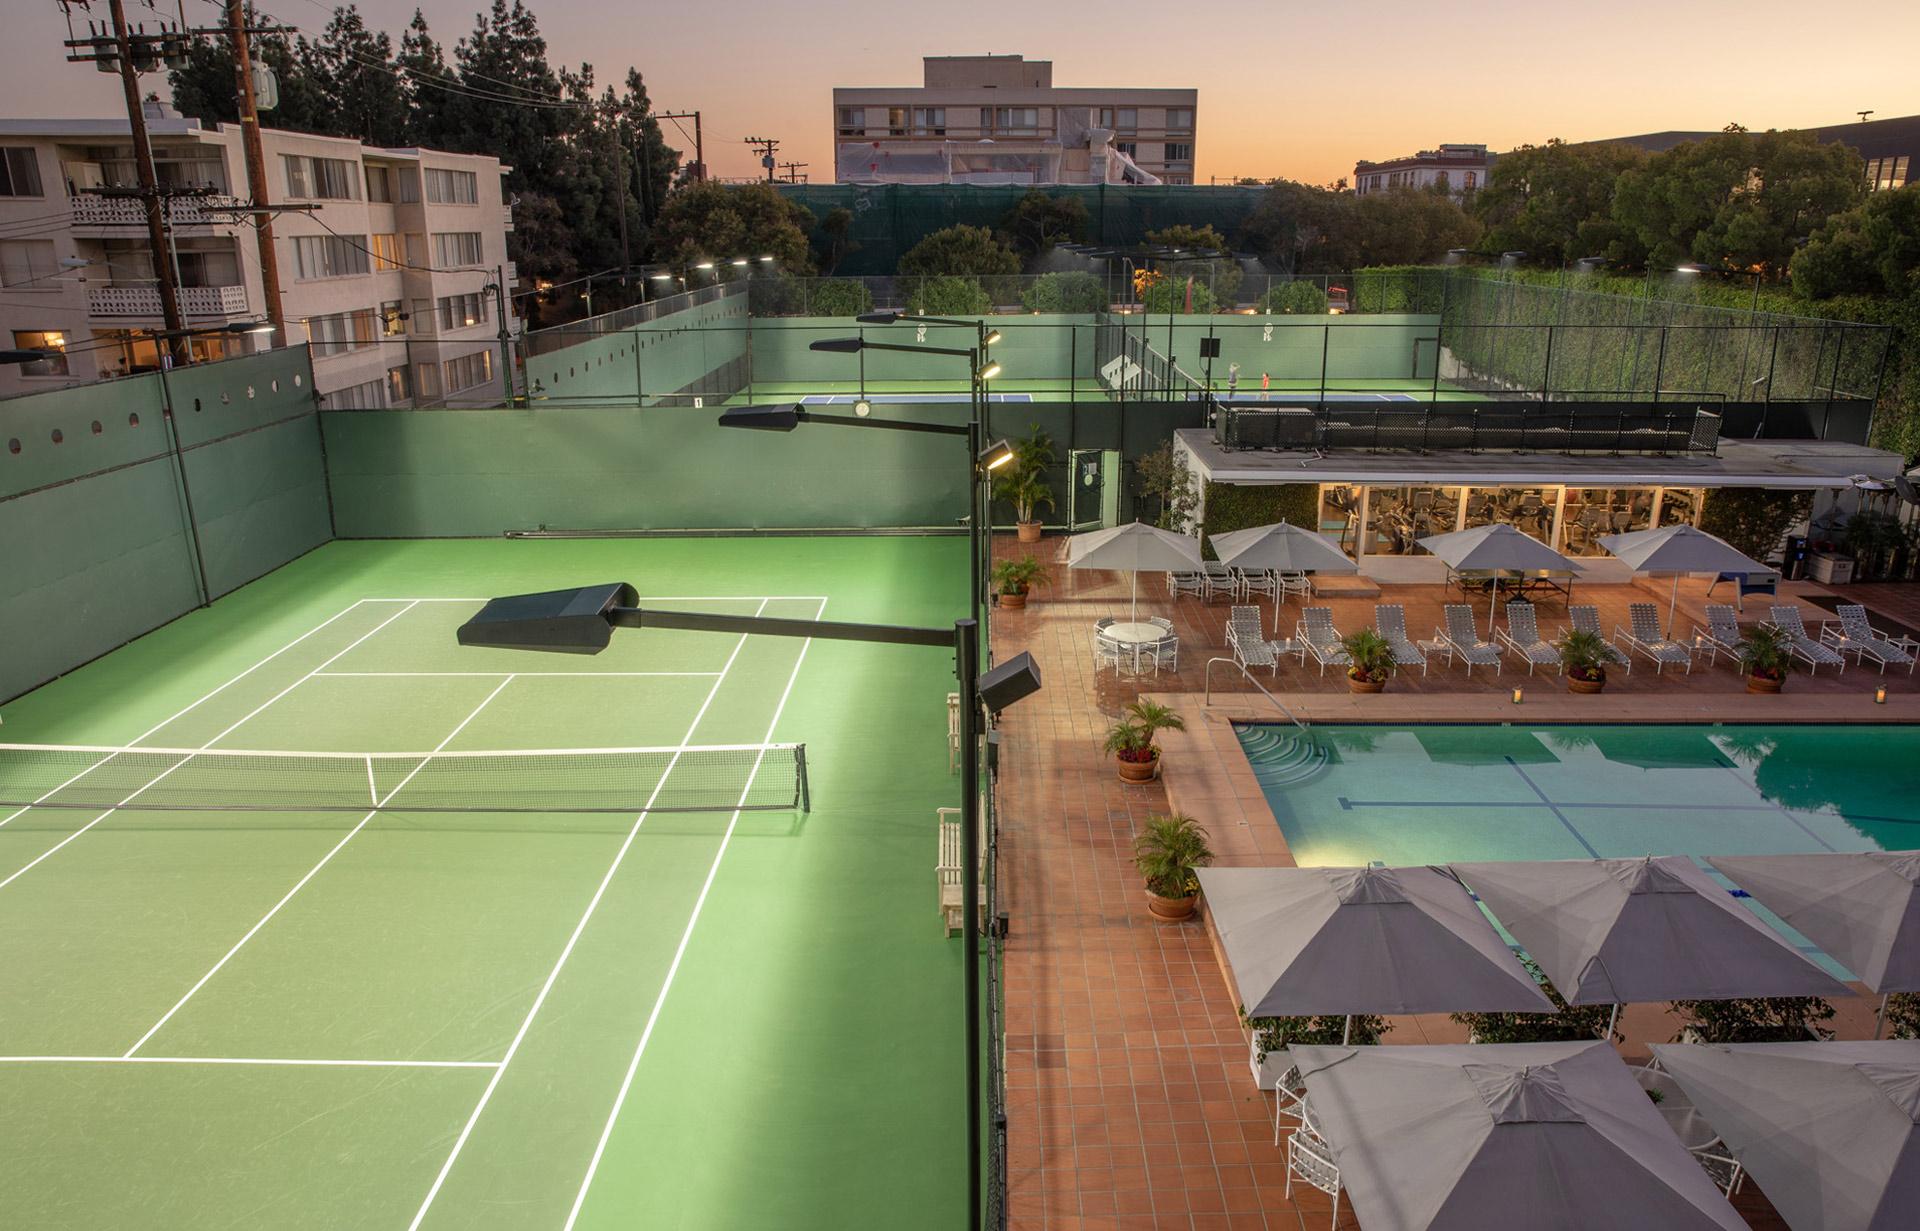 45 HQ Photos Beverly Hills Tennis Center - Tennis Courts Reopen In Beverly Hills | Beverly Hills, CA ...